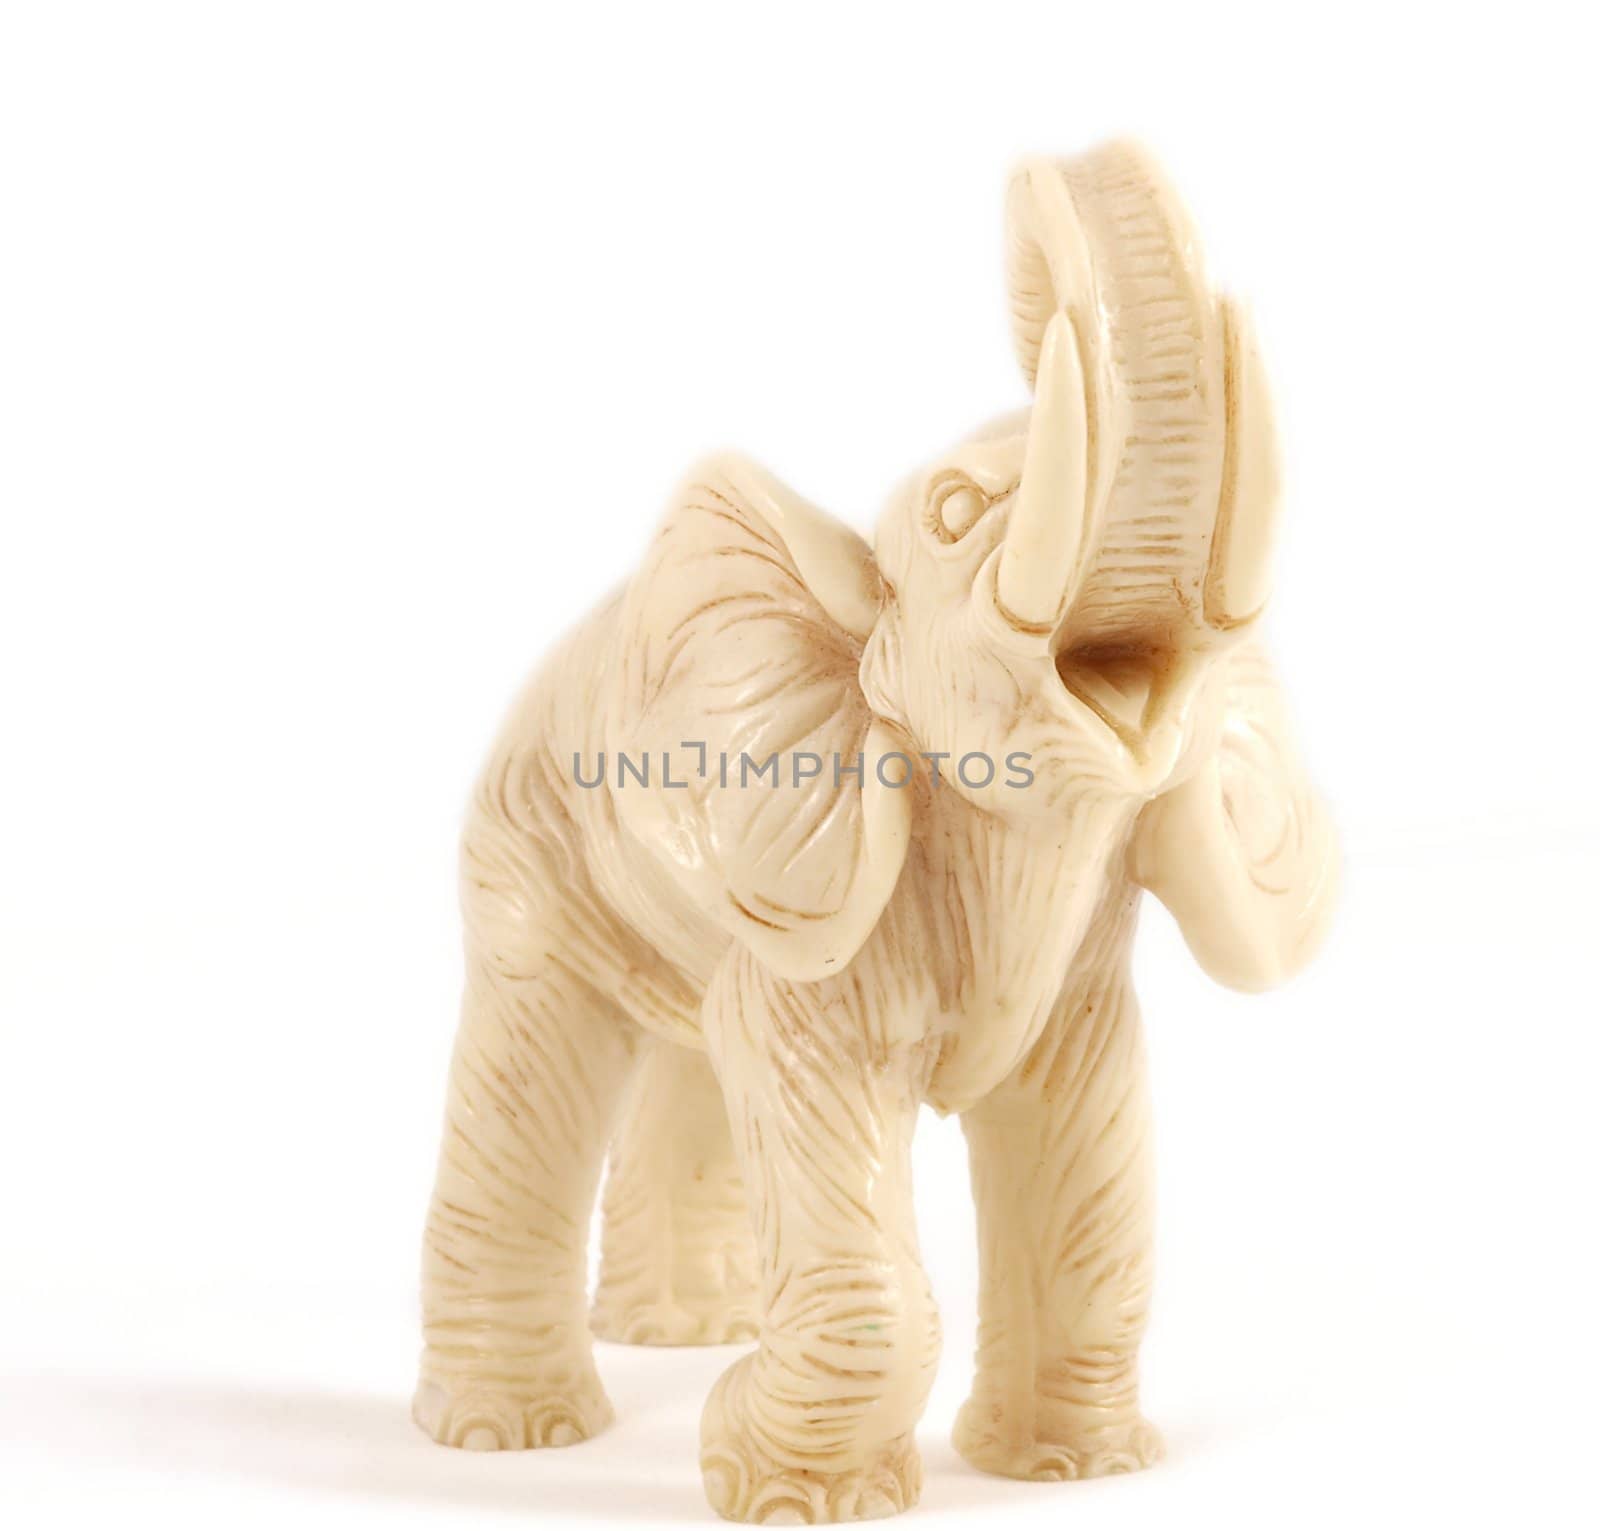 Small elephant model standing towards white background